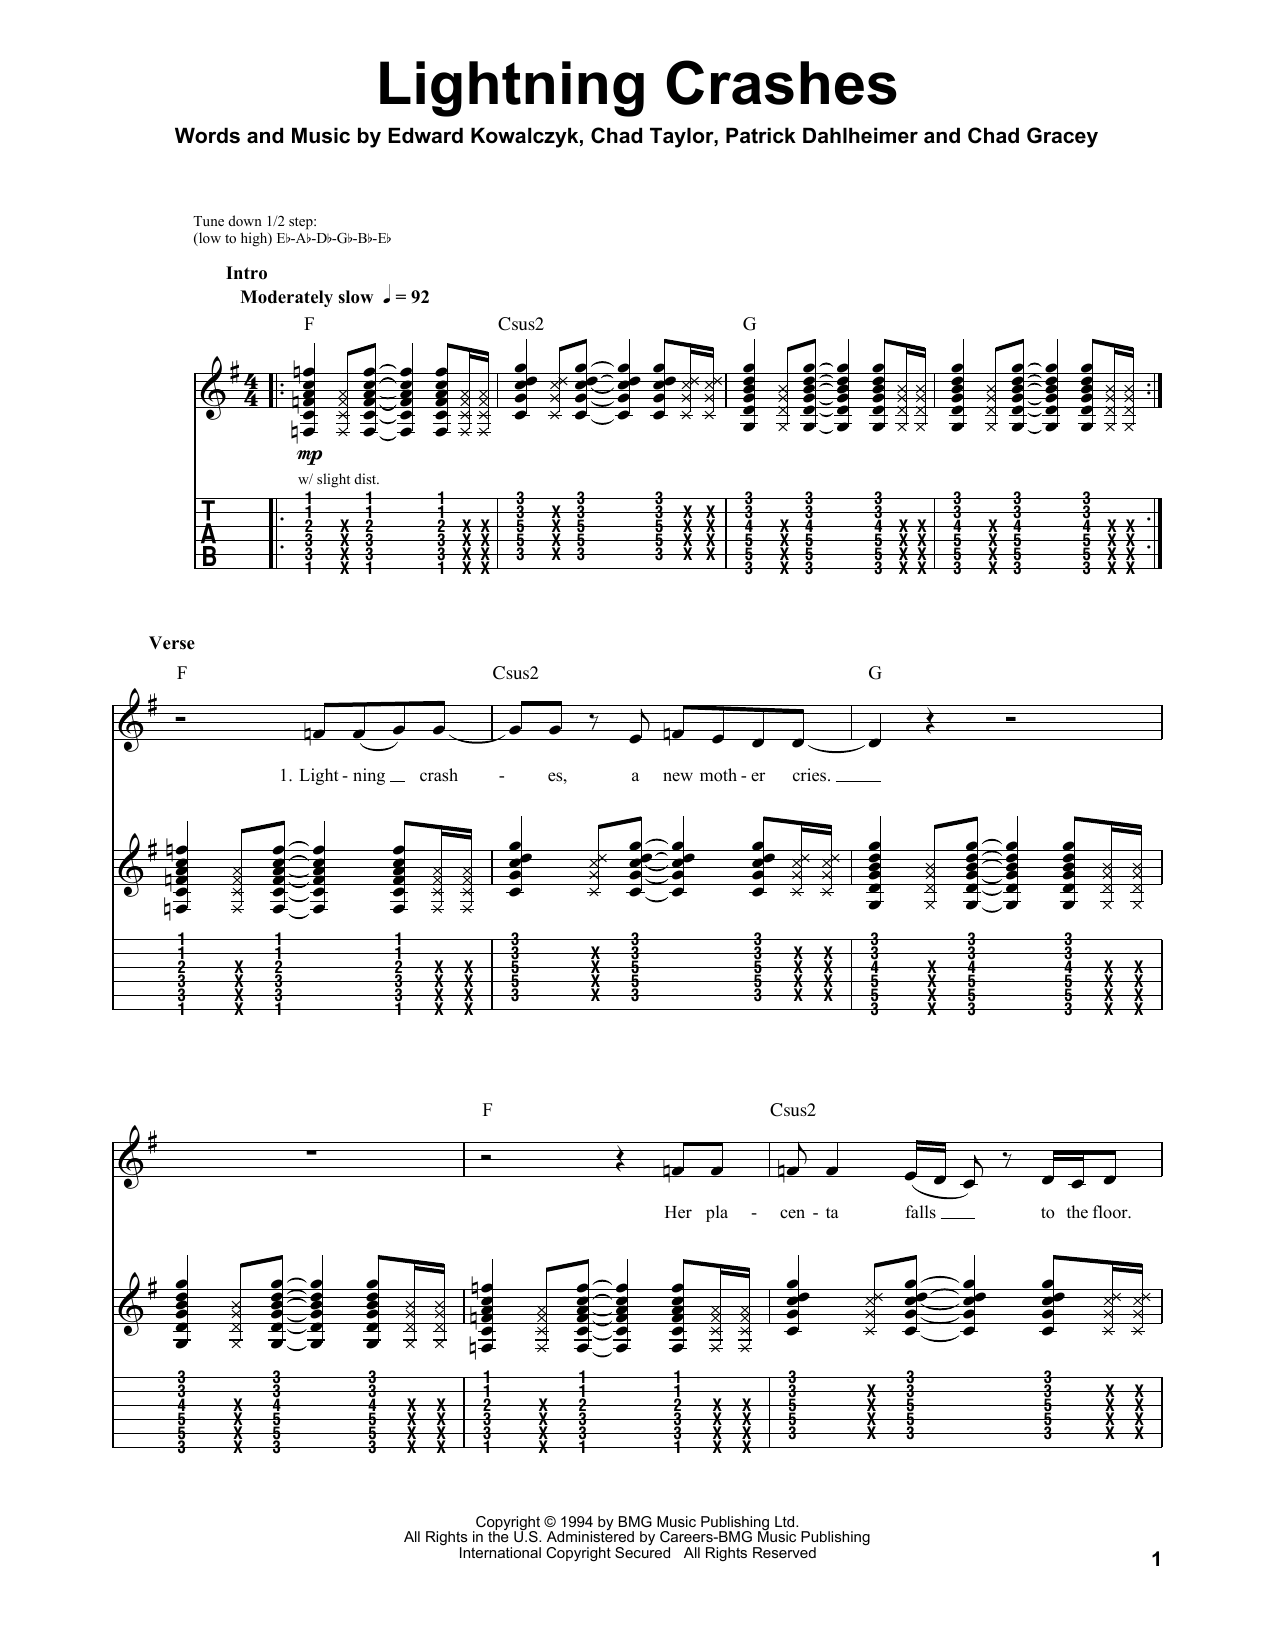 Live Lightning Crashes Sheet Music Notes & Chords for Guitar Lead Sheet - Download or Print PDF